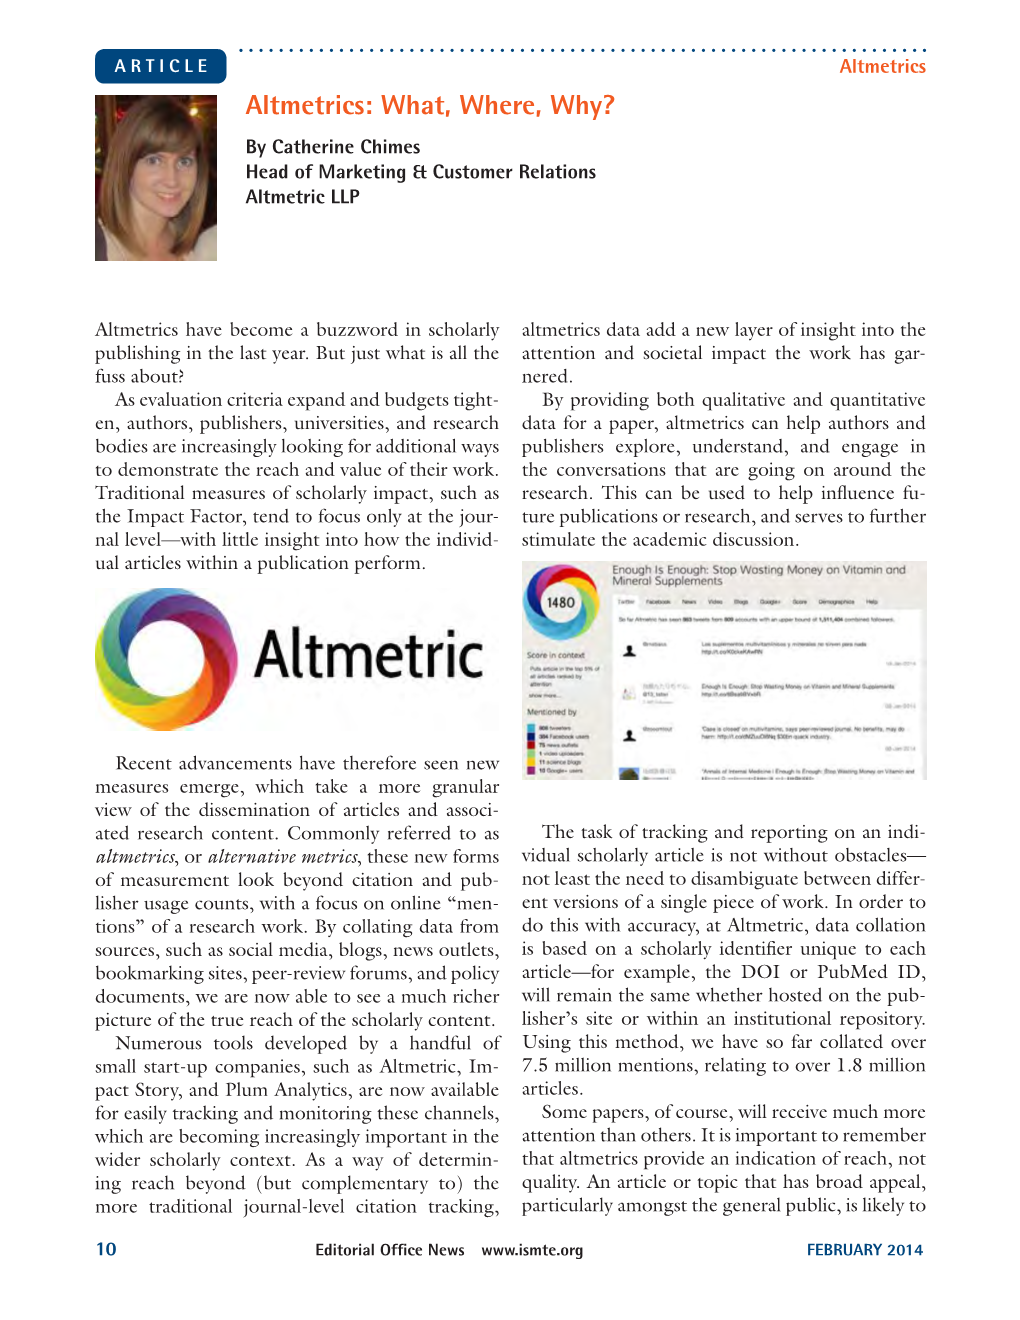 Altmetrics: What, Where, Why? by Catherine Chimes Head of Marketing & Customer Relations Altmetric LLP